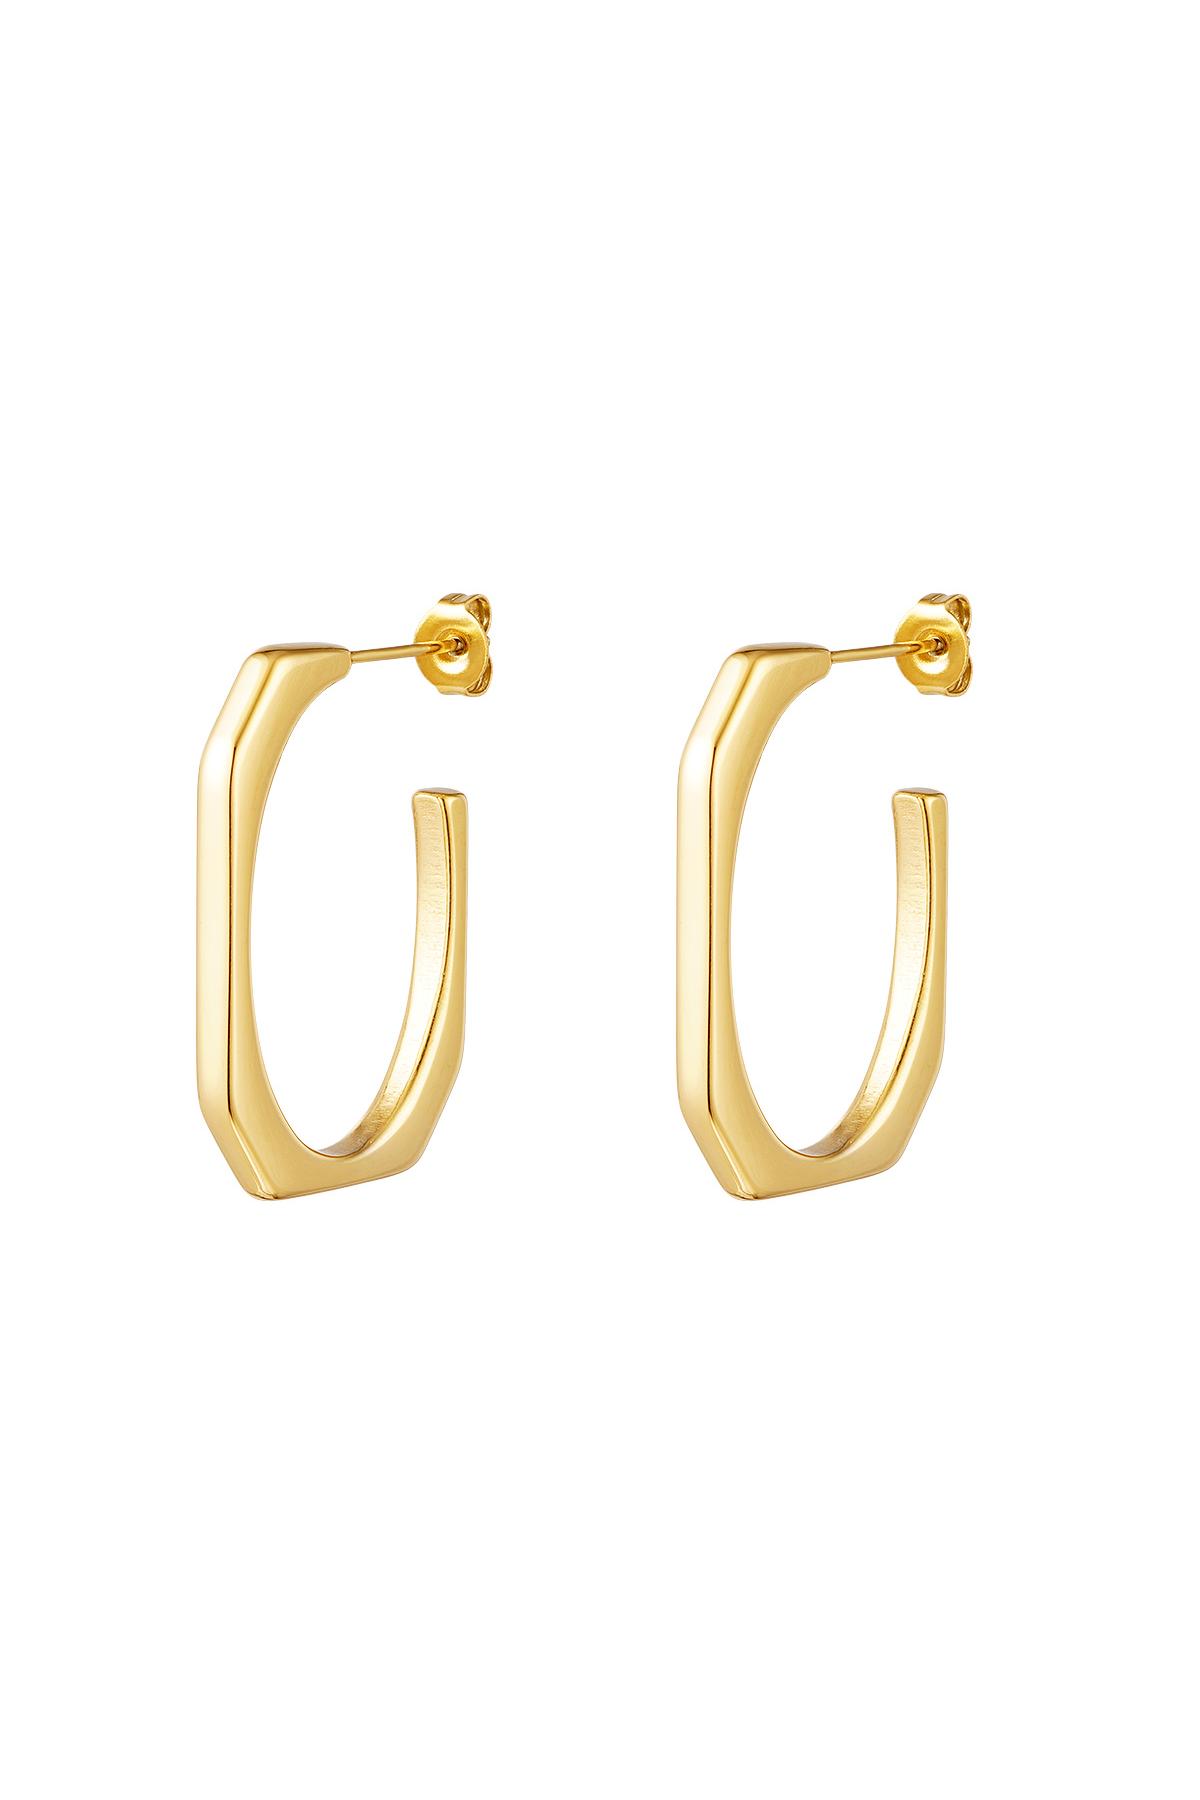 Earrings geometric Gold Stainless Steel 